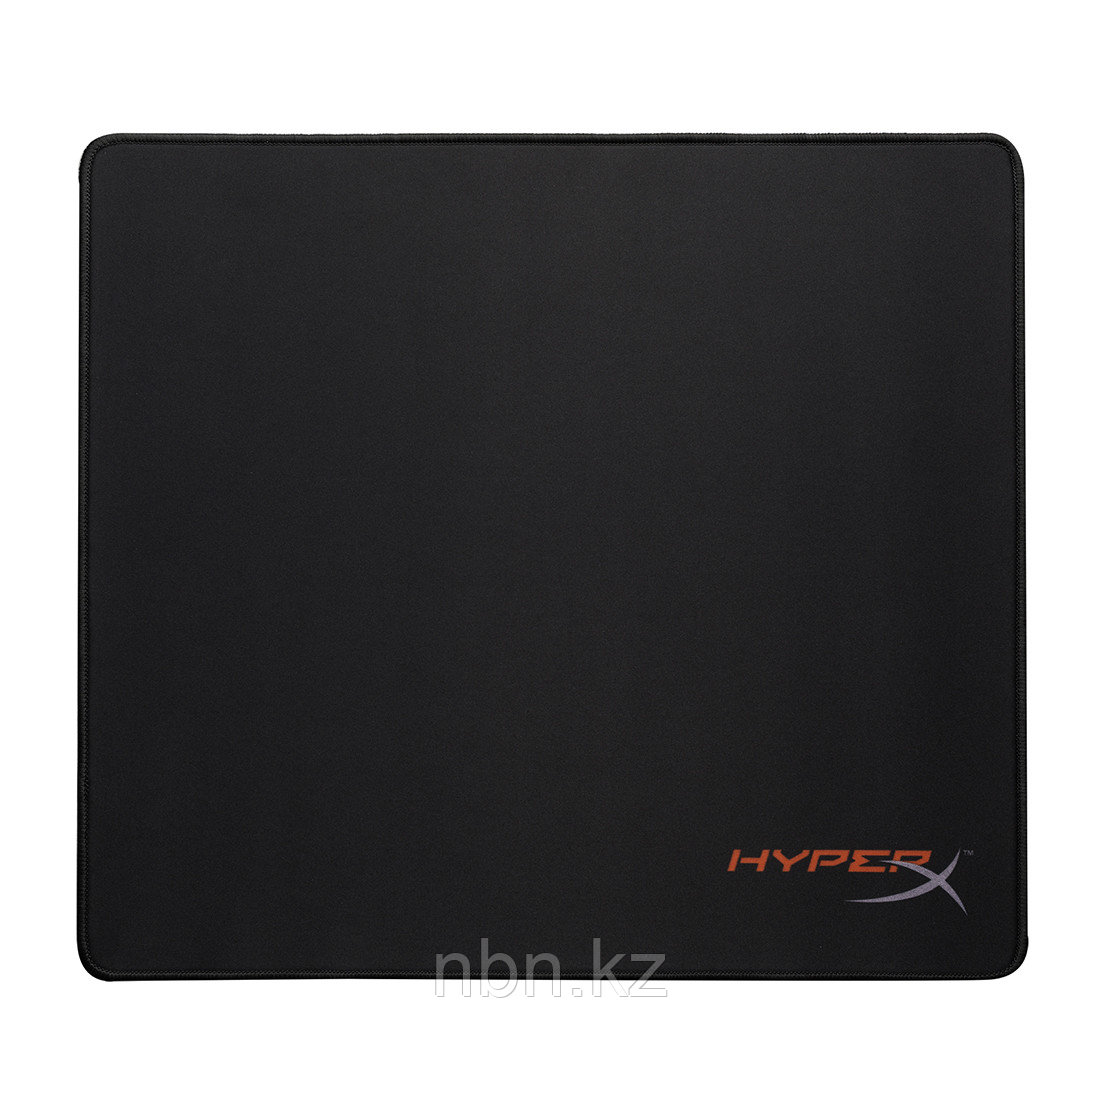 Коврик для компьютерной мыши HyperX Pro Gaming (Small) HX-MPFS-SM, фото 1